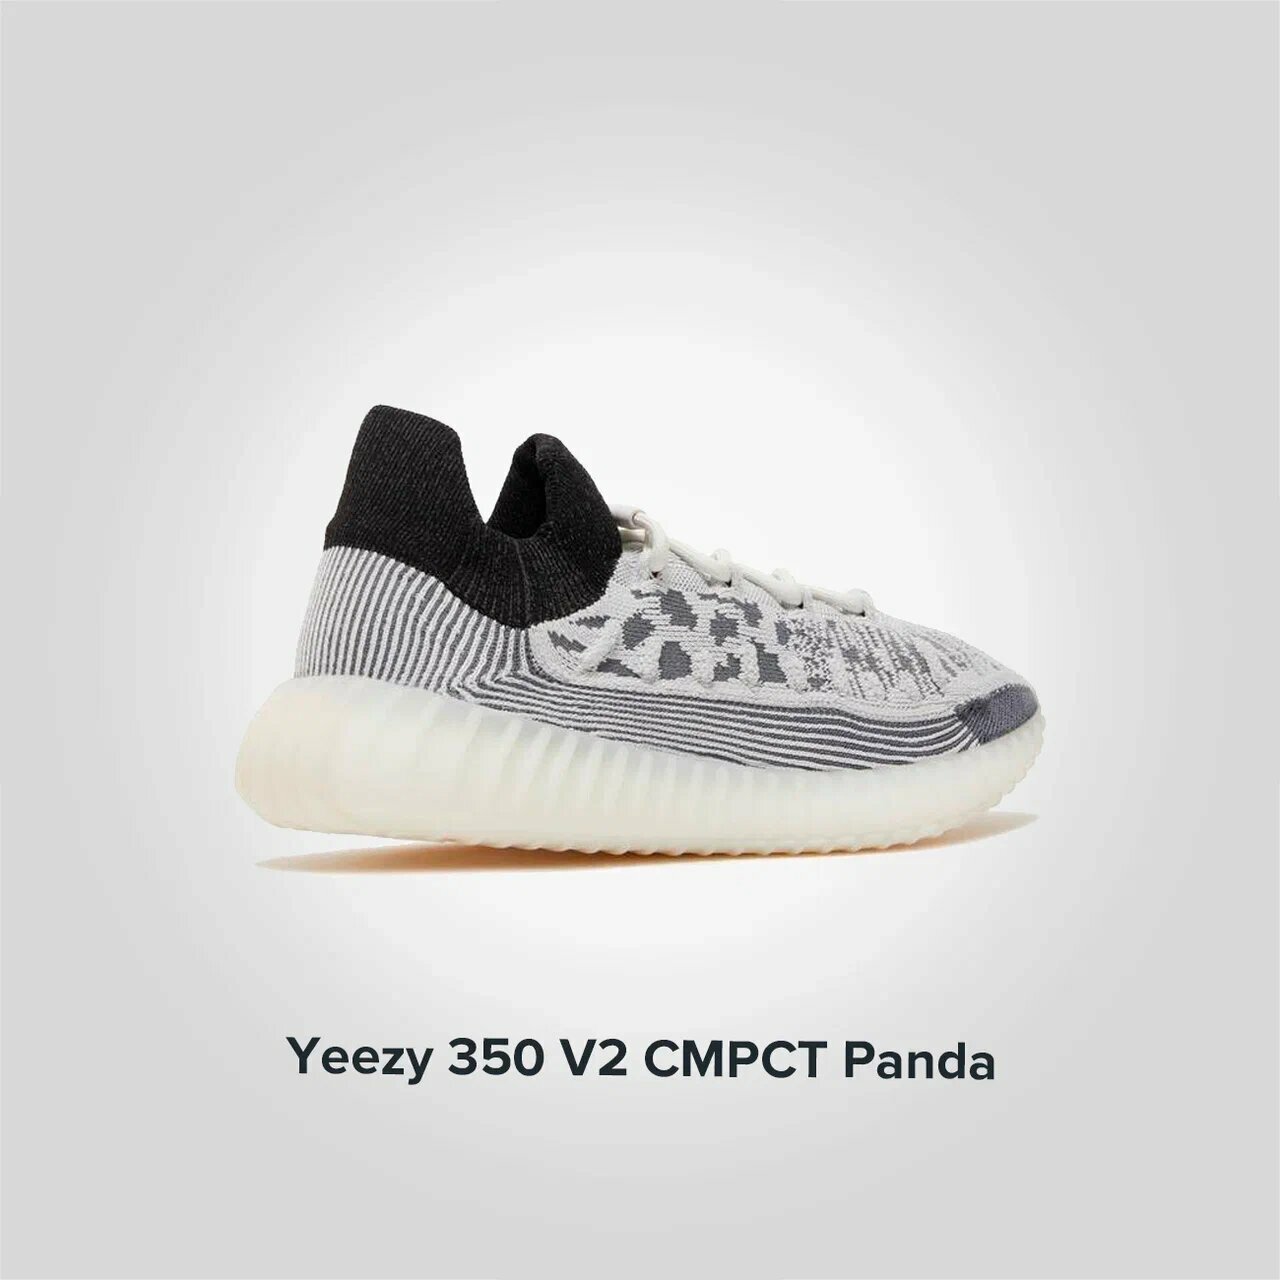 Yeezy Boost 350 V2 CMPCT Panda